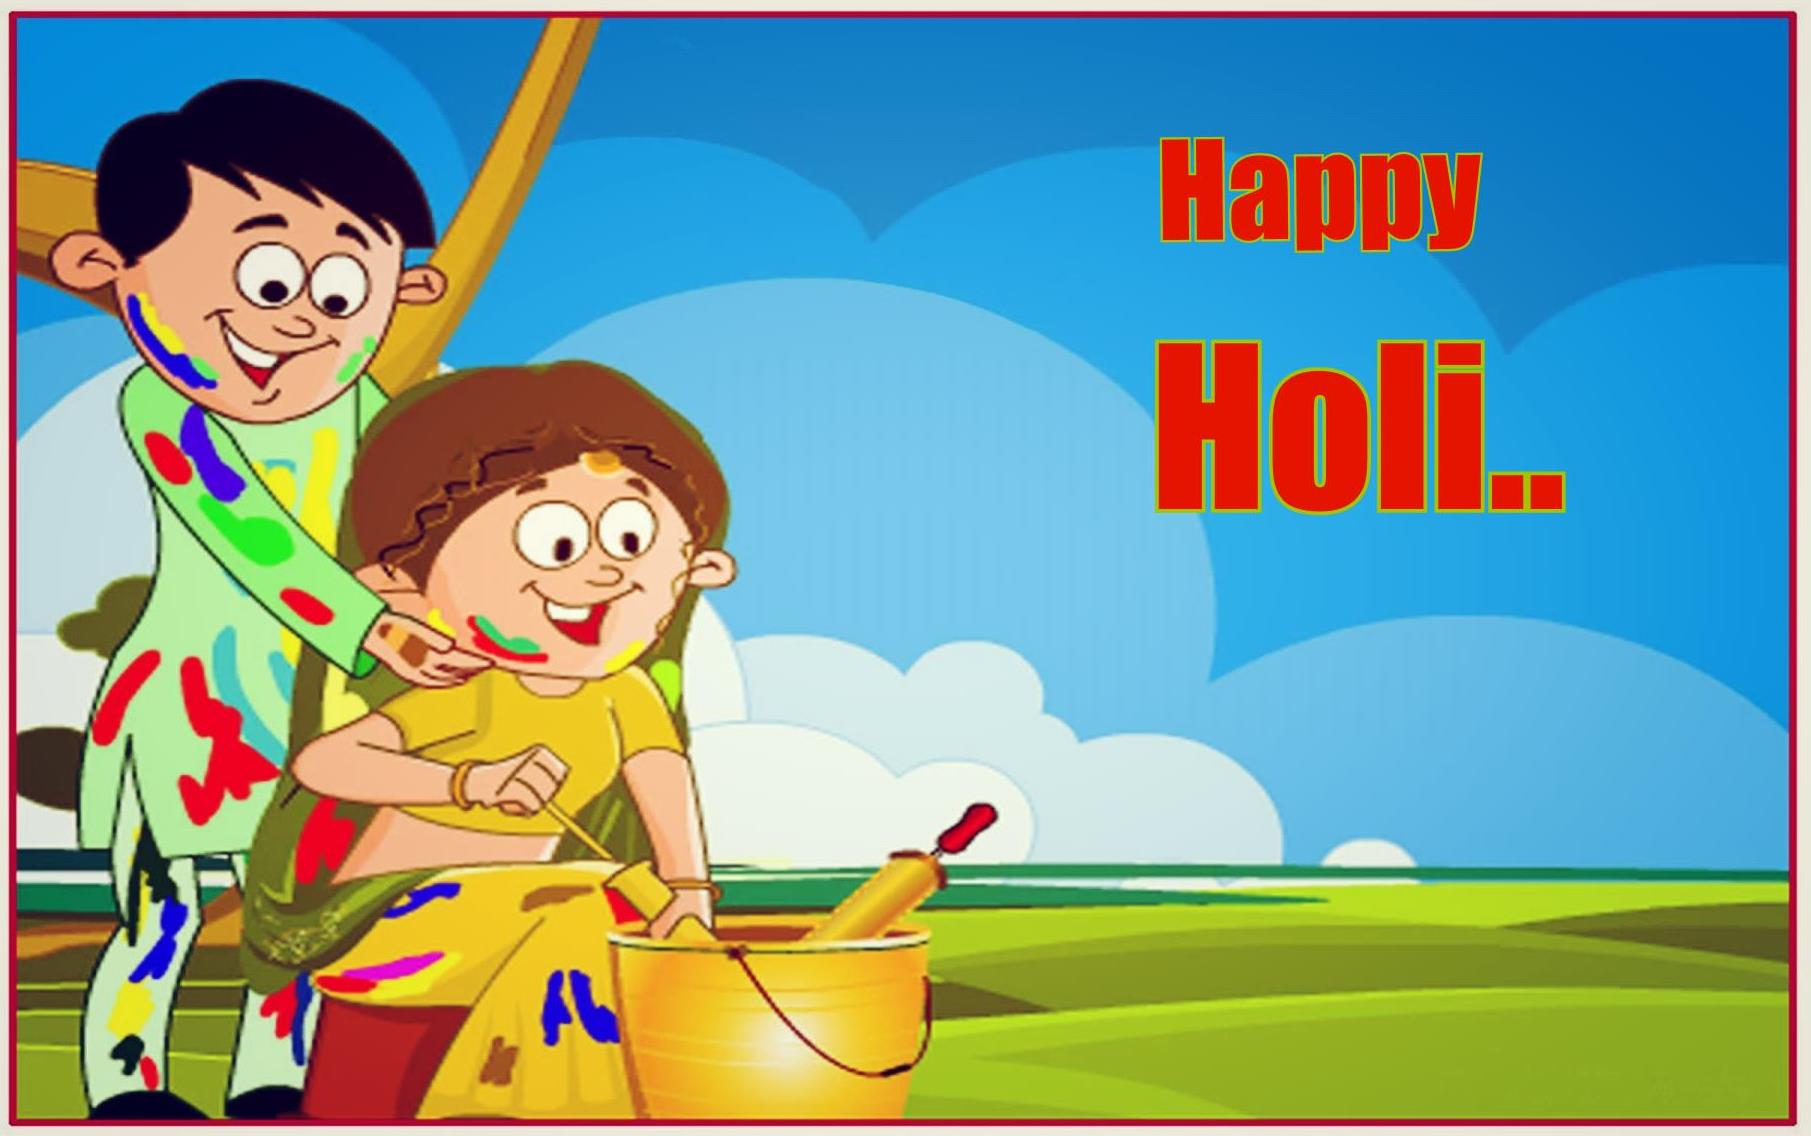 The Best Happy Holi Cartoon Images.